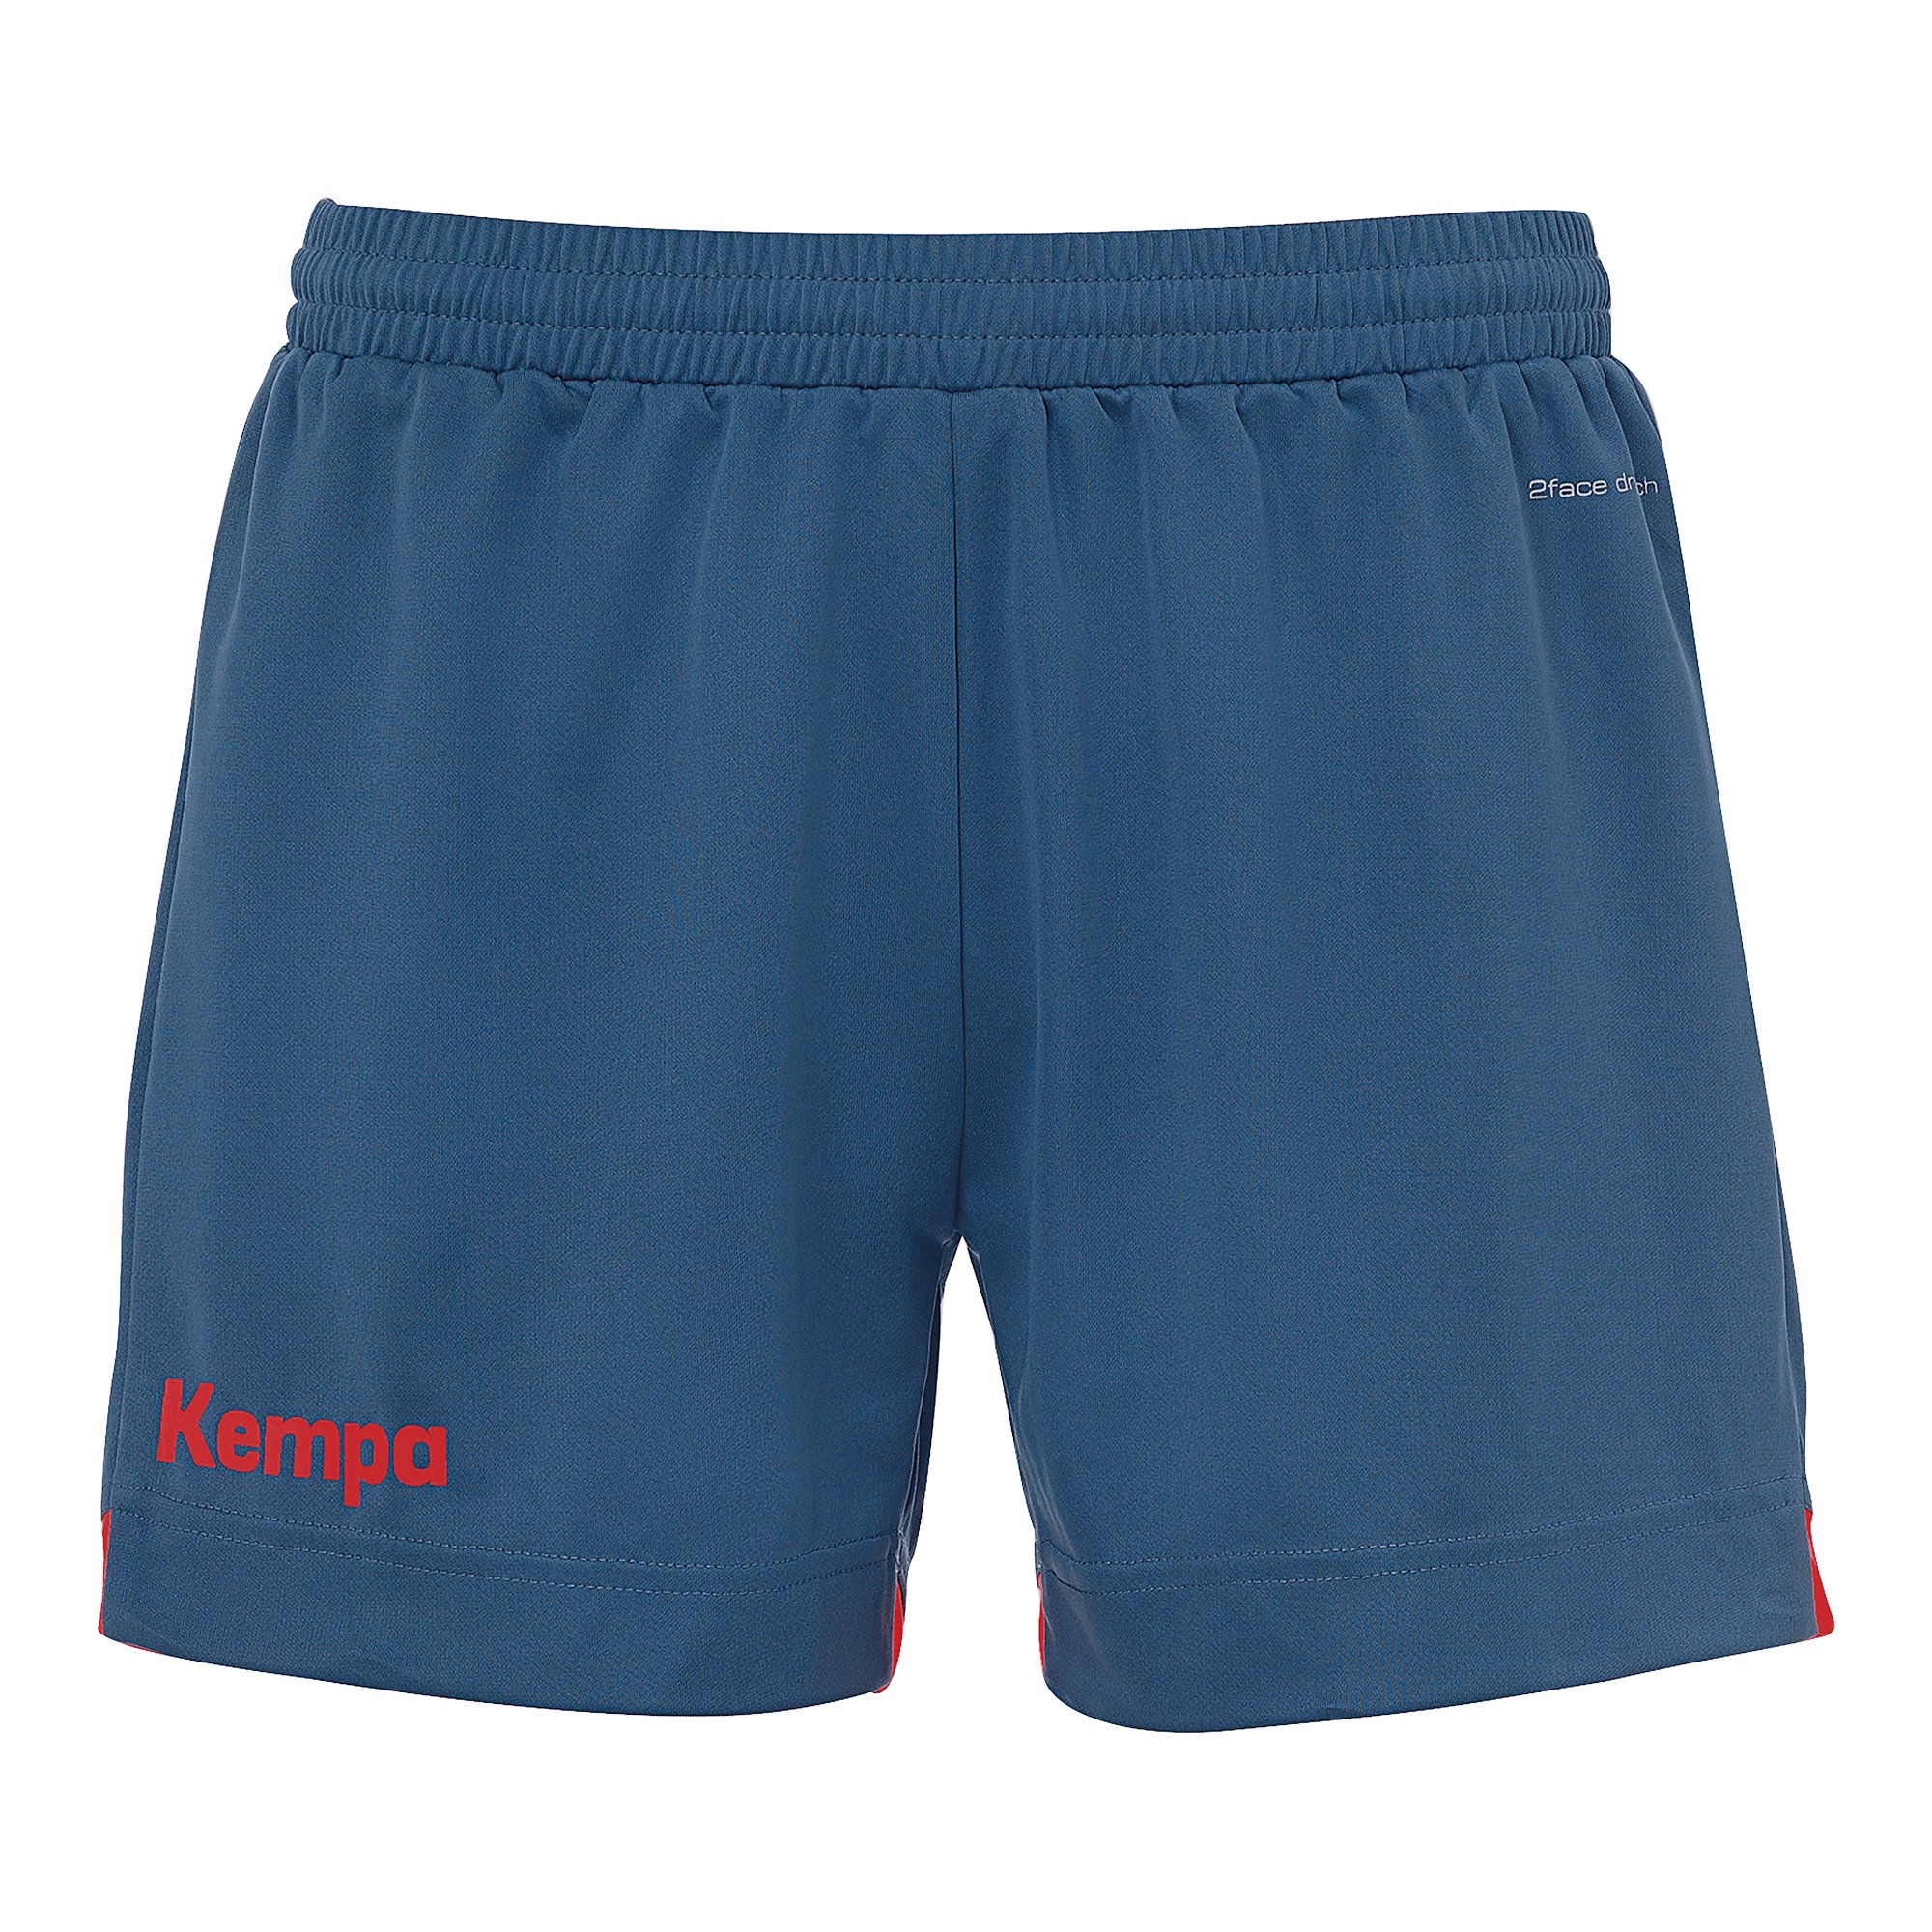 Kempa Player Shorts Damen